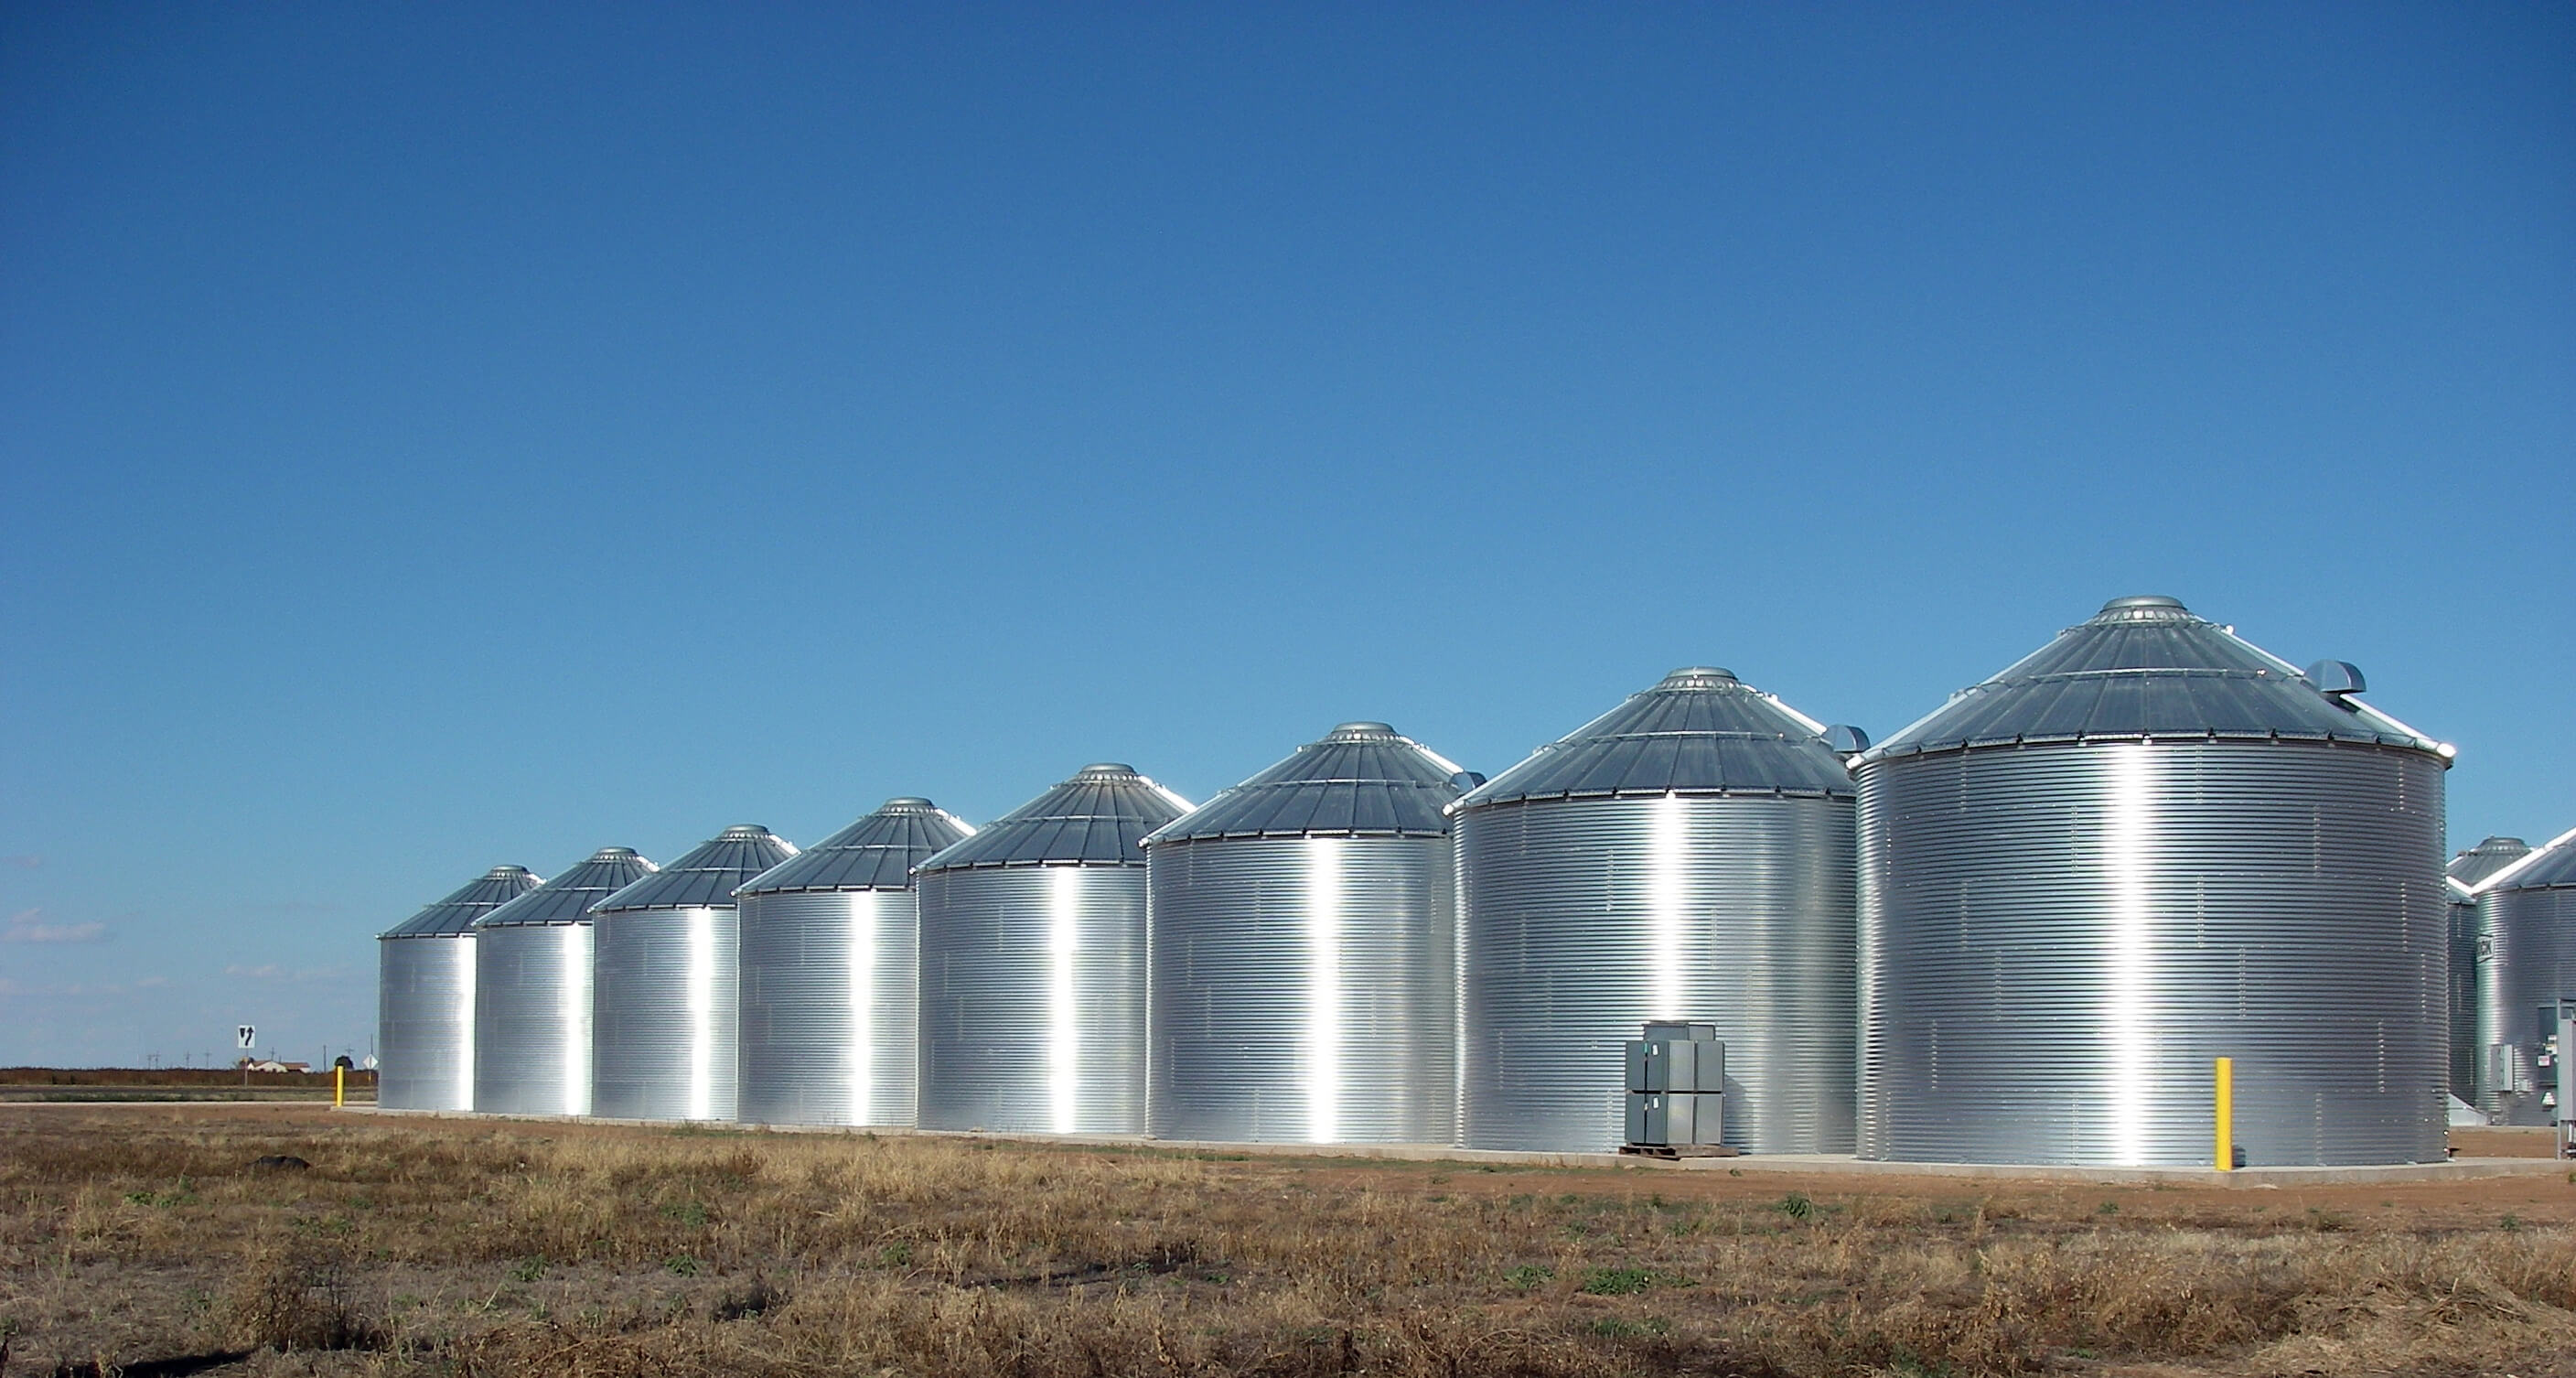 A set of metal grain silos on a farm in Texas